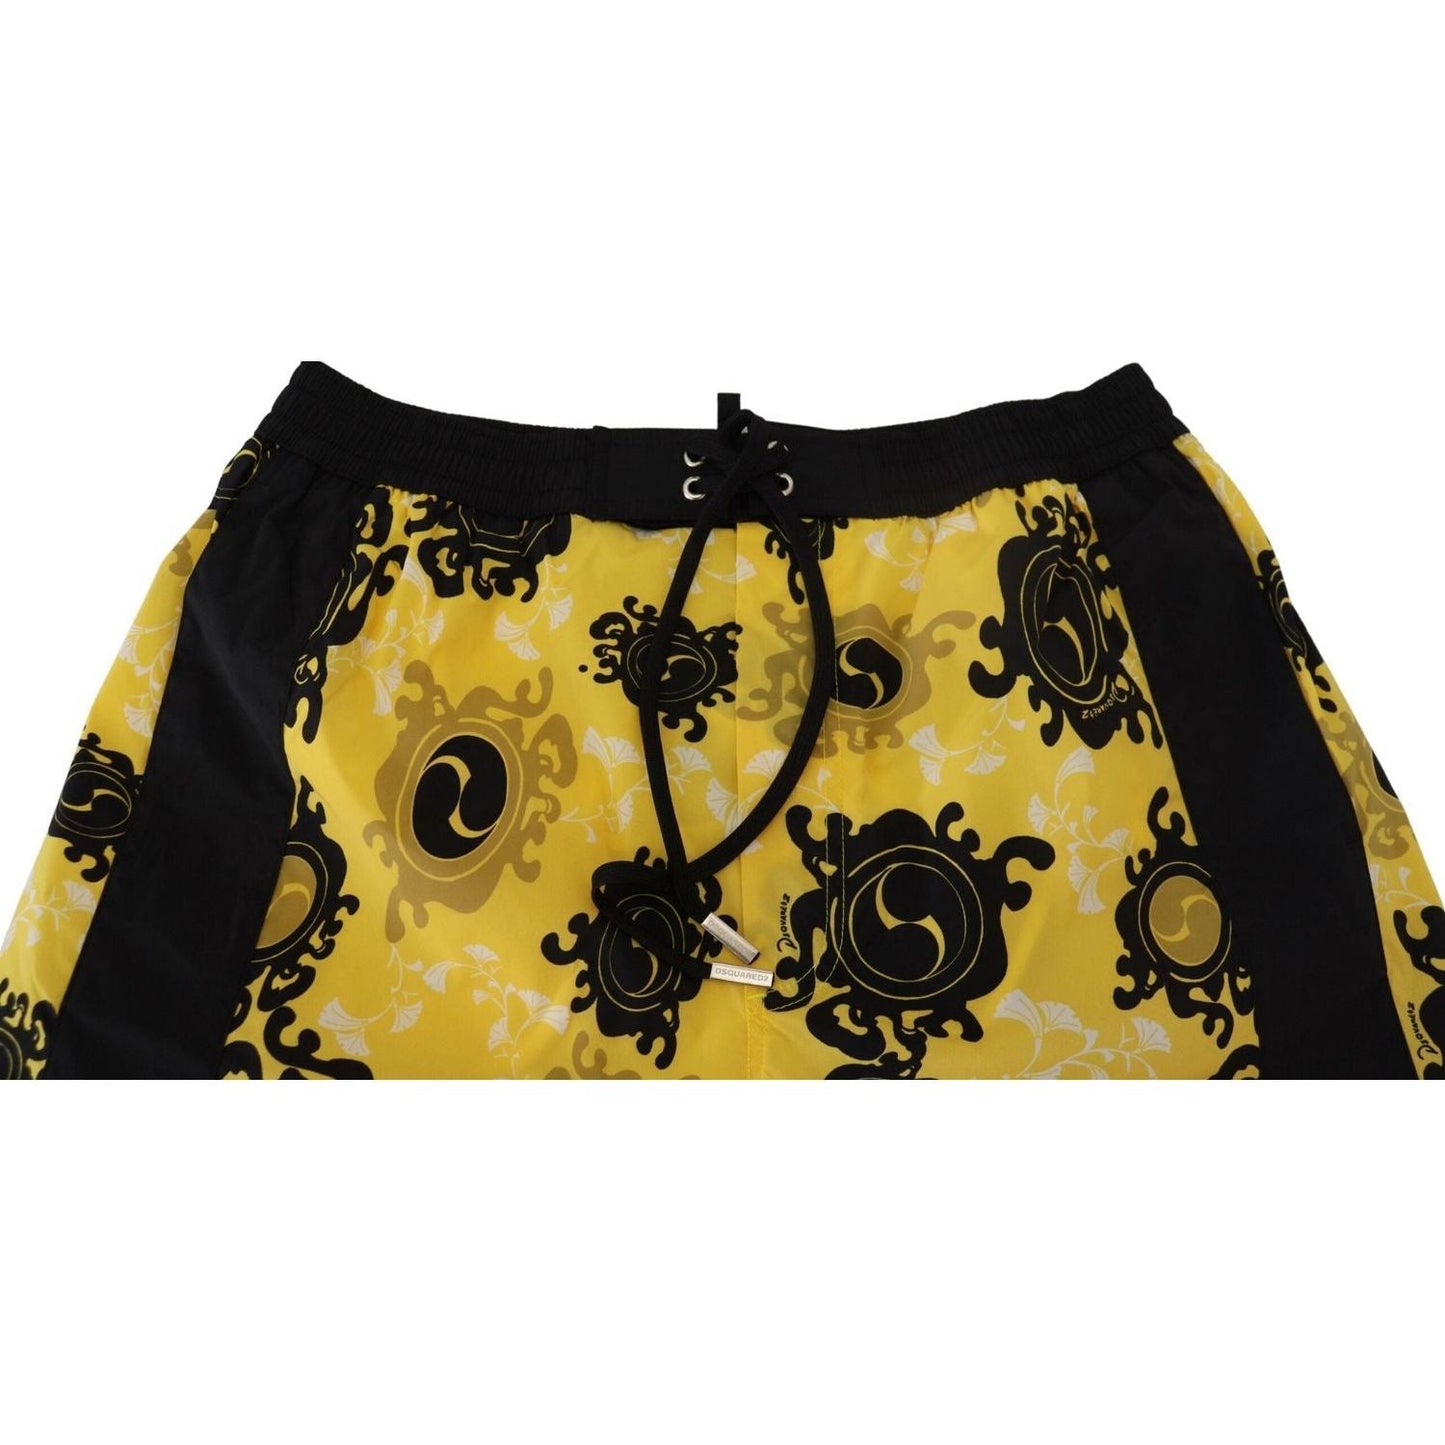 Dsquared² Yellow Block Print Swim Shorts Boxer yellow-black-printed-men-beachwear-shorts-swimwear IMG_5982-scaled-9ac6d03c-7f6.jpg